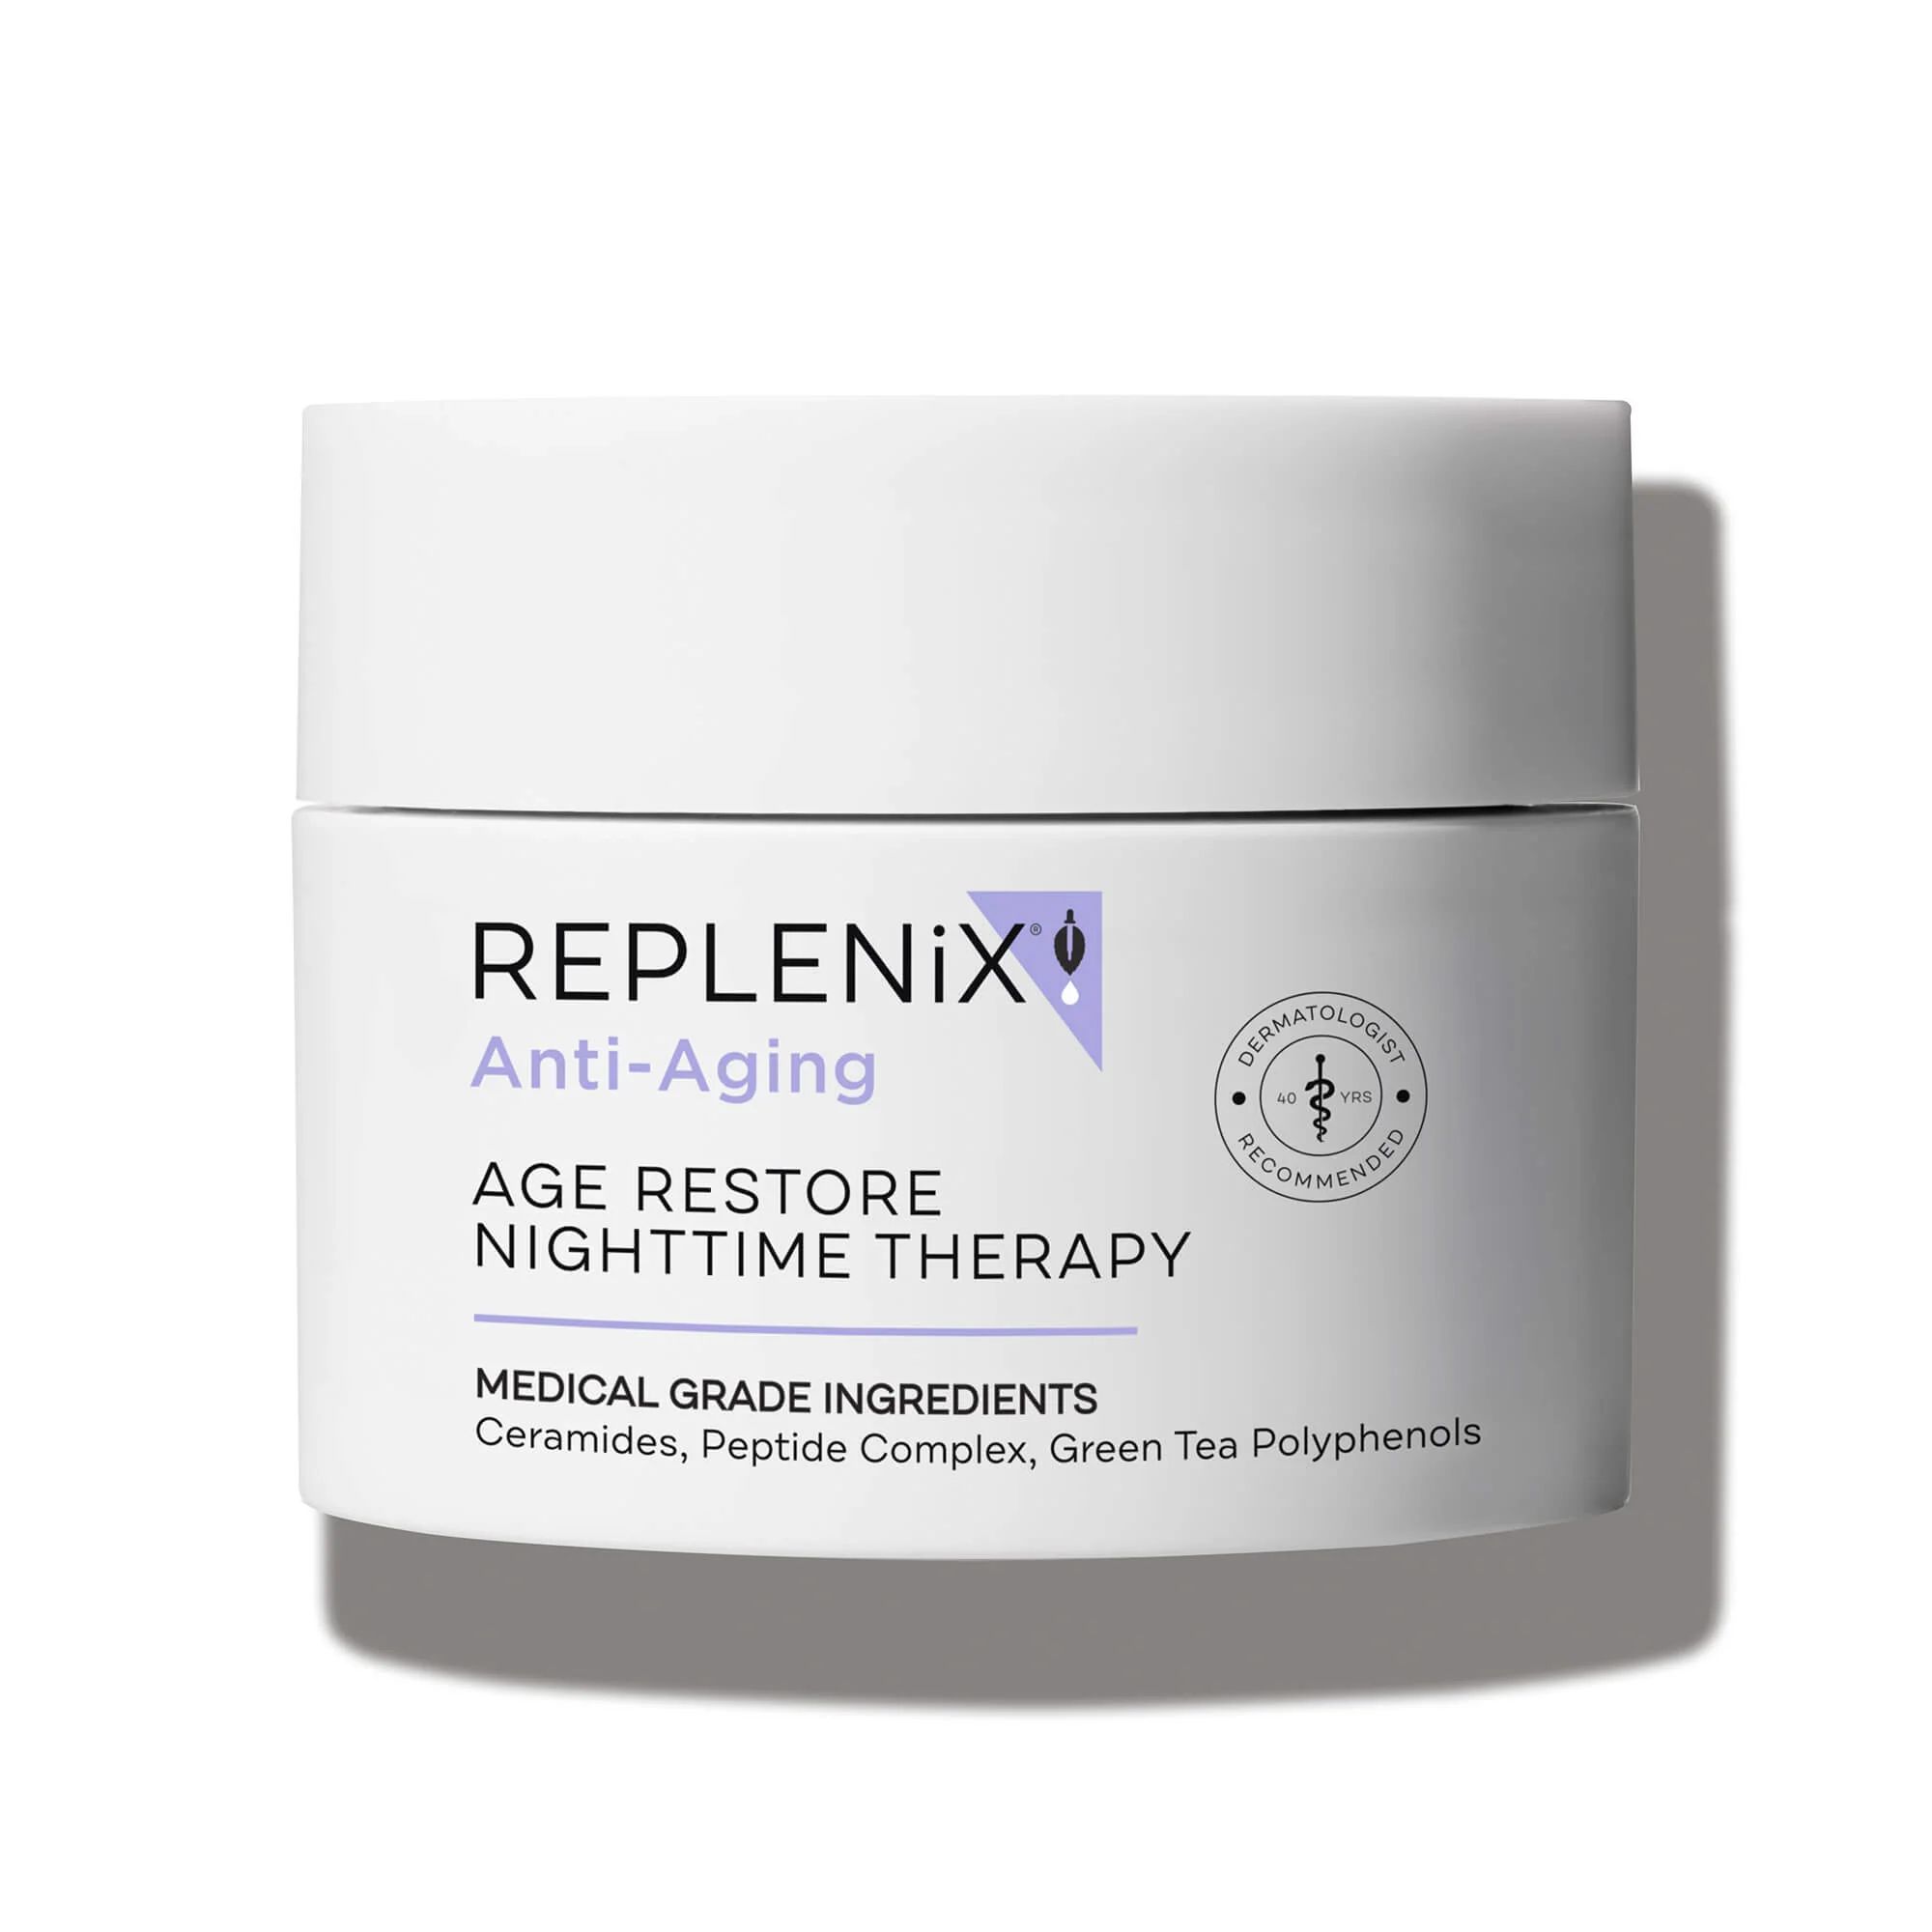 Age Restore Nighttime Therapy | Replenix